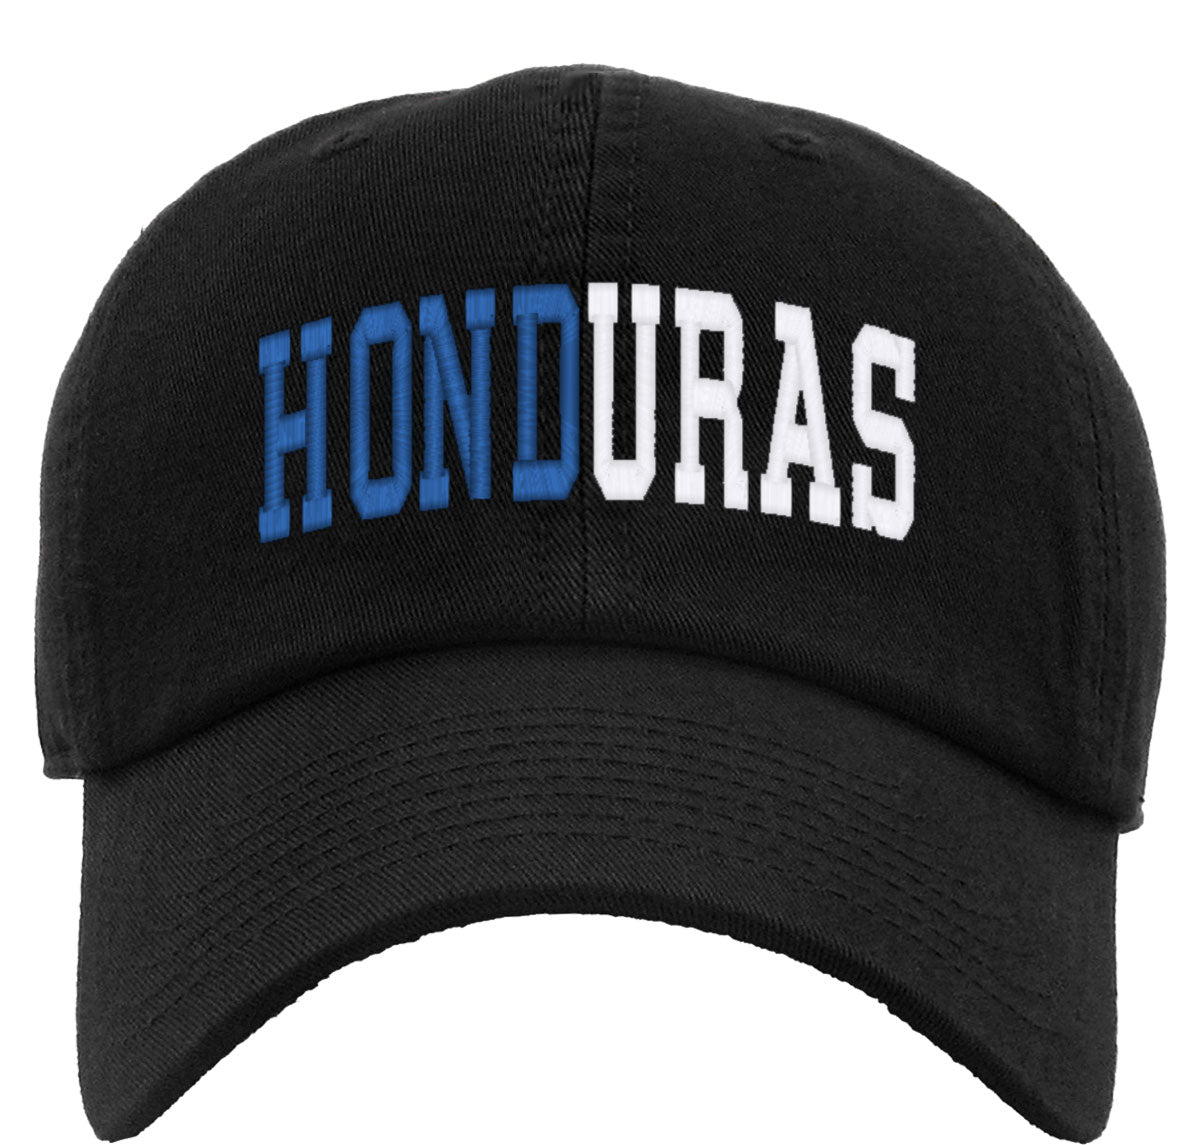 Honduras Premium Baseball Cap